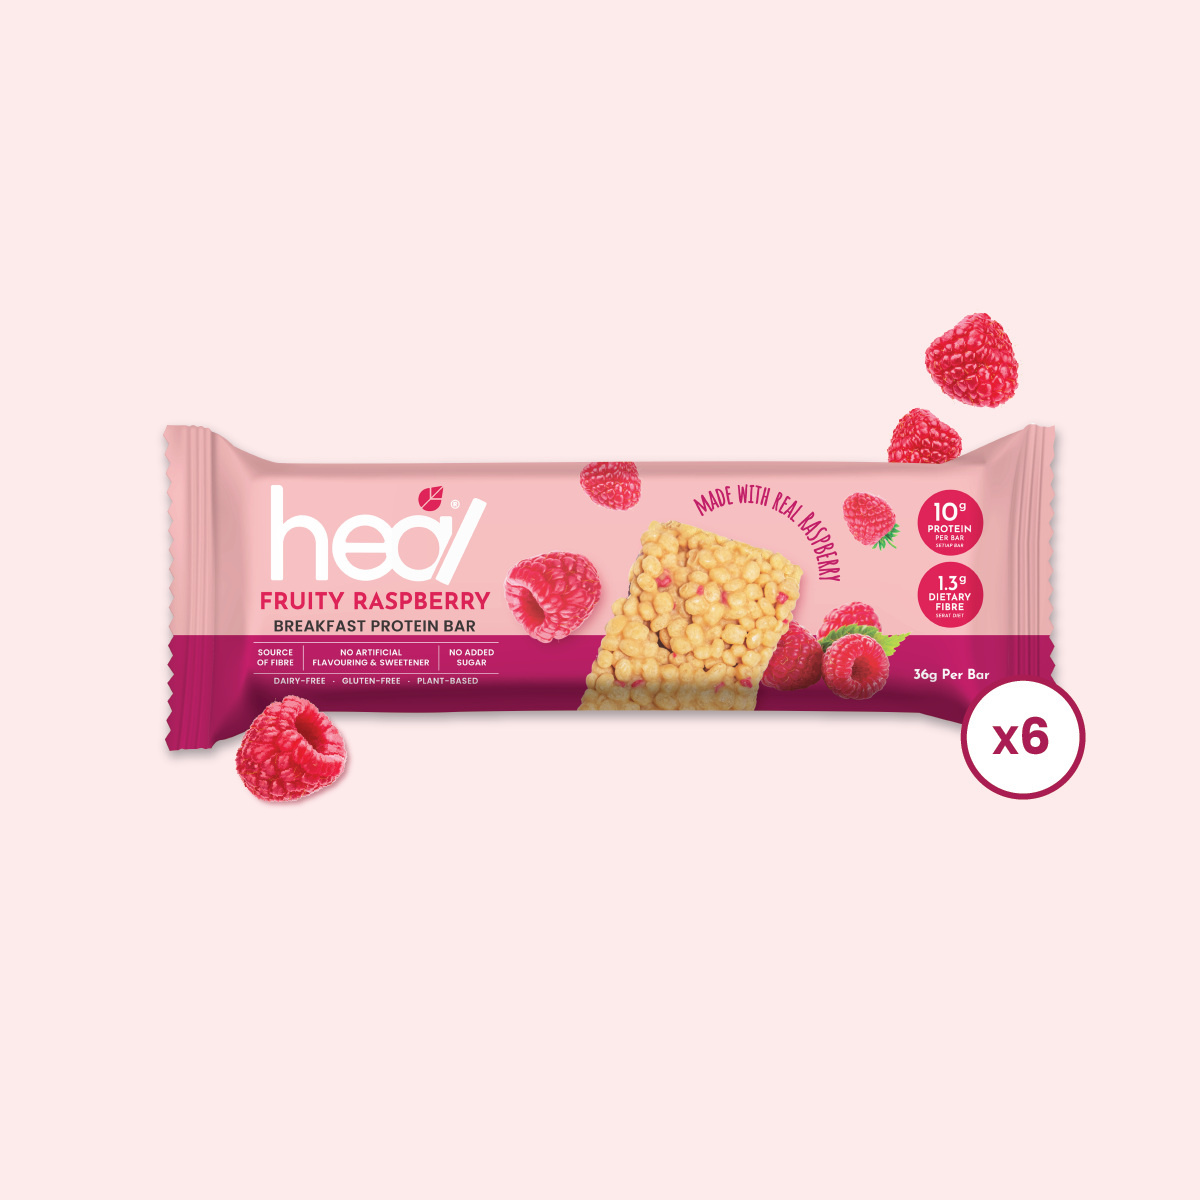 Heal Fruity Raspberry Breakfast Protein Bar (36g)